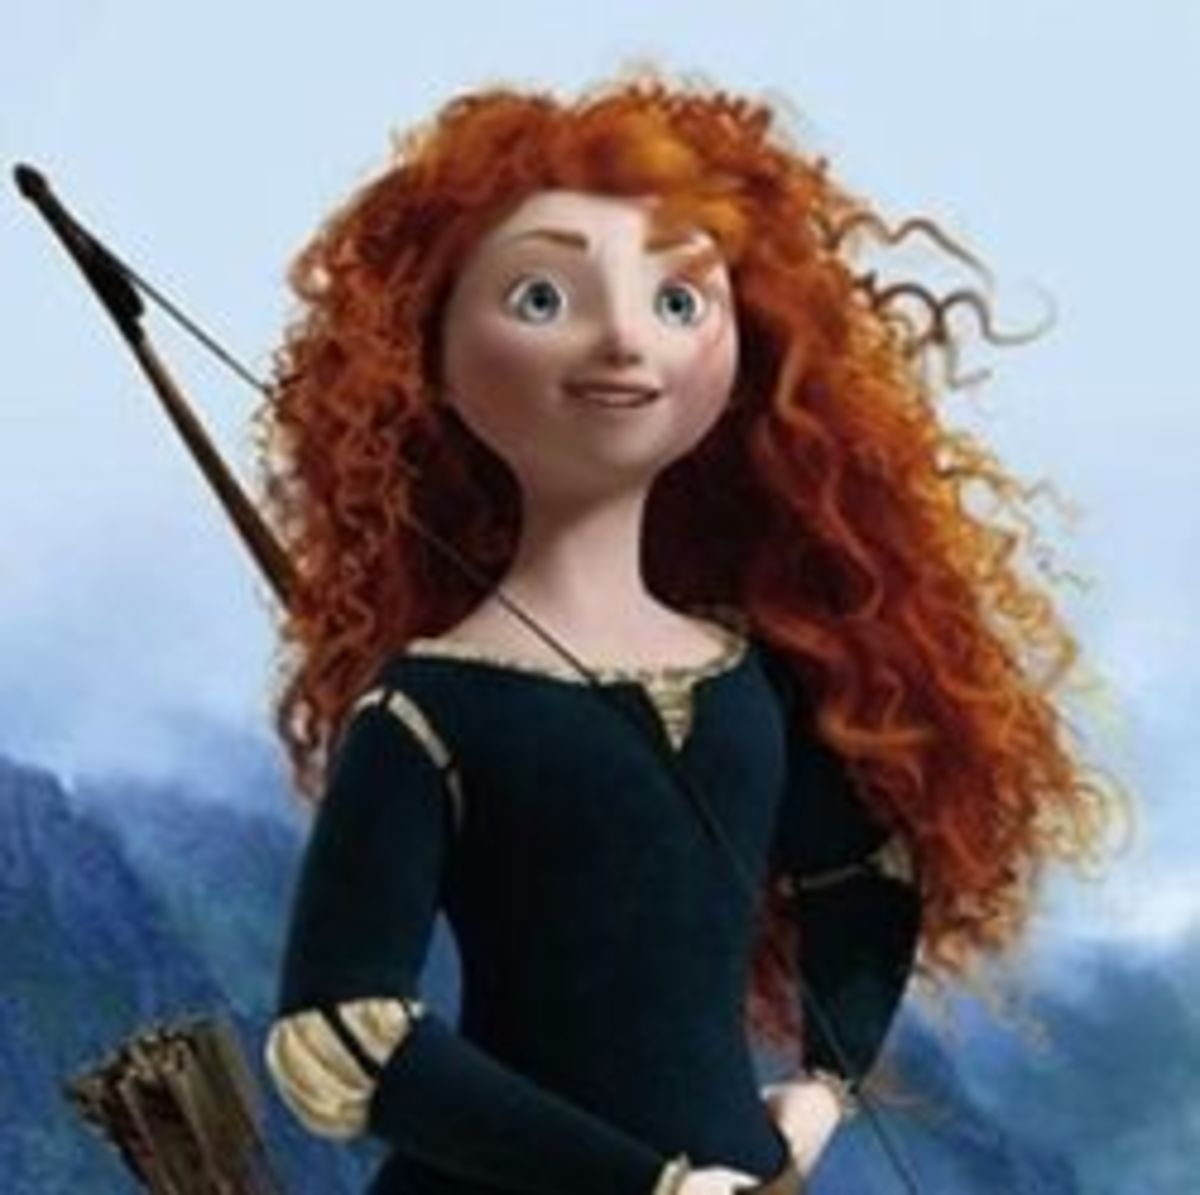 Meet Merida from Disney Pixar's Brave